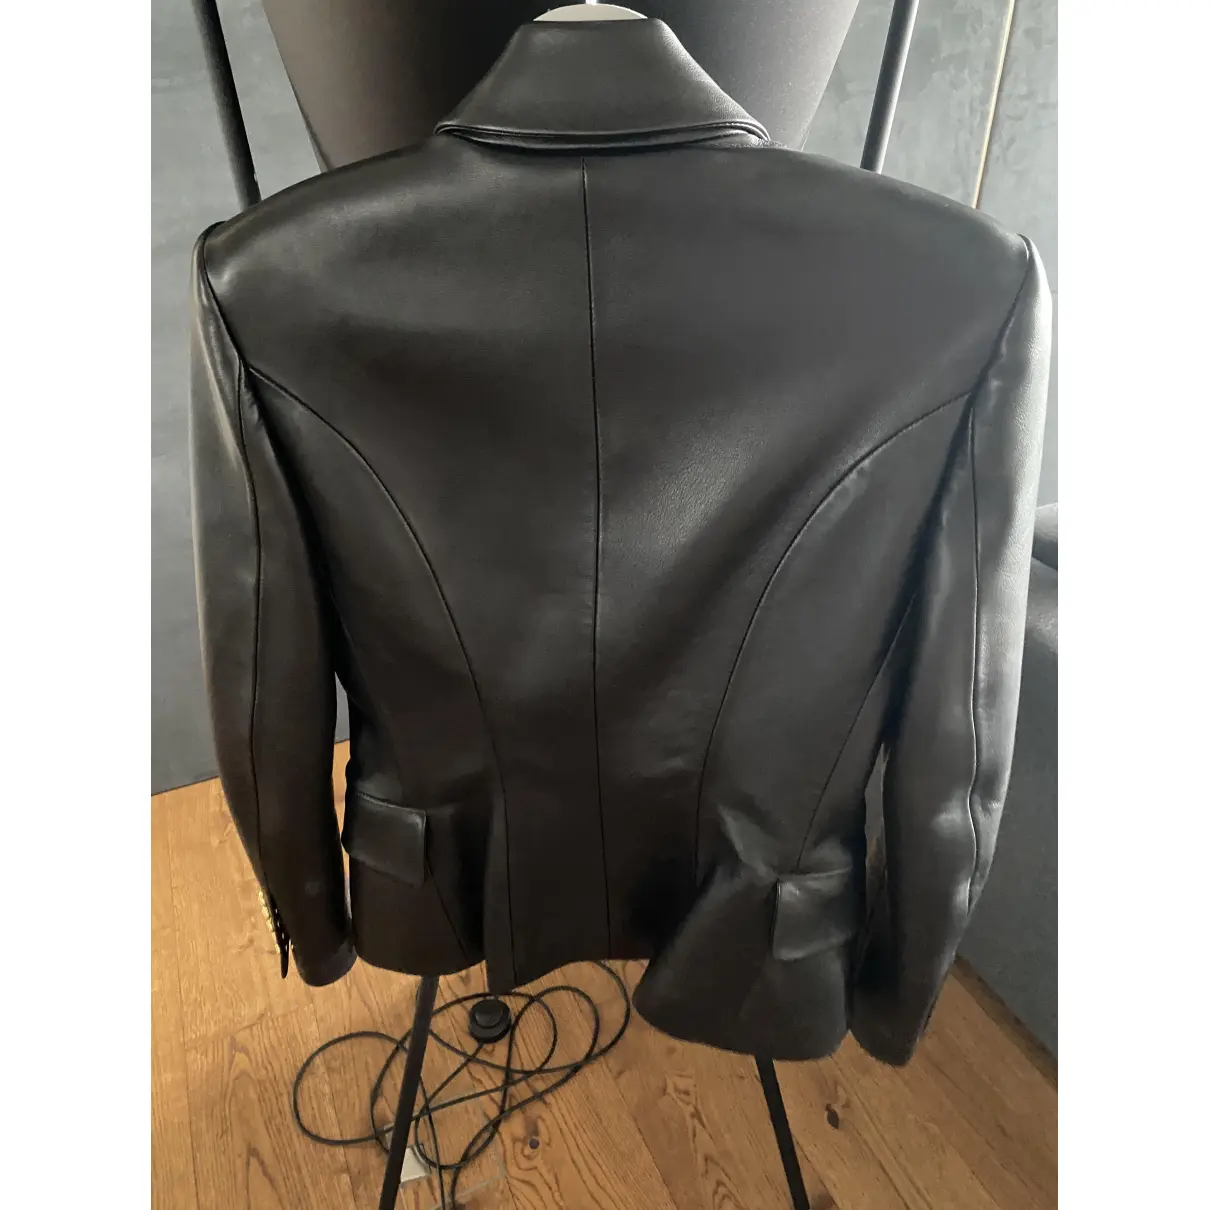 Buy Balmain Leather suit jacket online